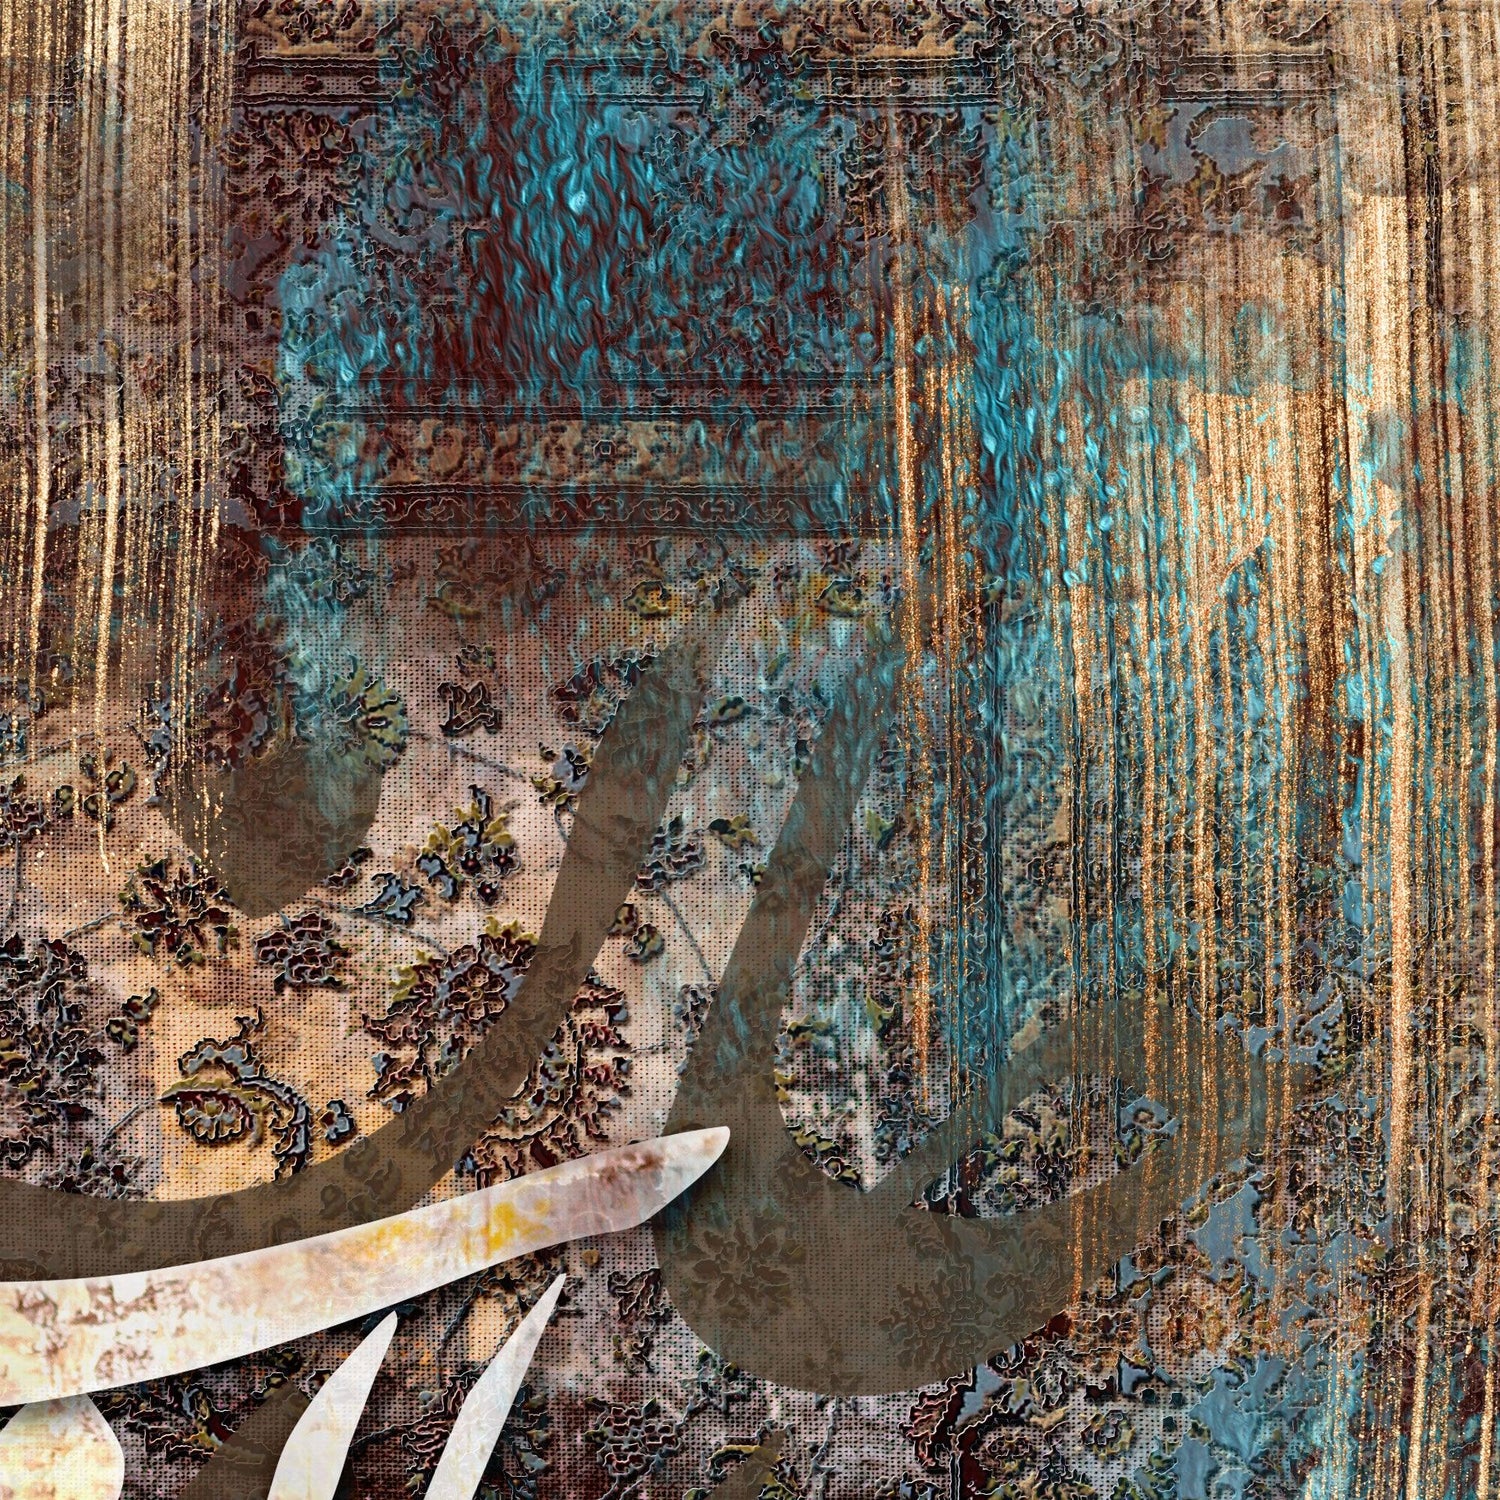 Moonese Jan Bash | Exquisite Persian Canvas Wall Art | Nastaliq Calligraphy - ORIAVI Persian Art, persian artwork for sale, persian calligraphy, persian calligraphy wall art, persian mix media wall art, persian painting, persian wall art